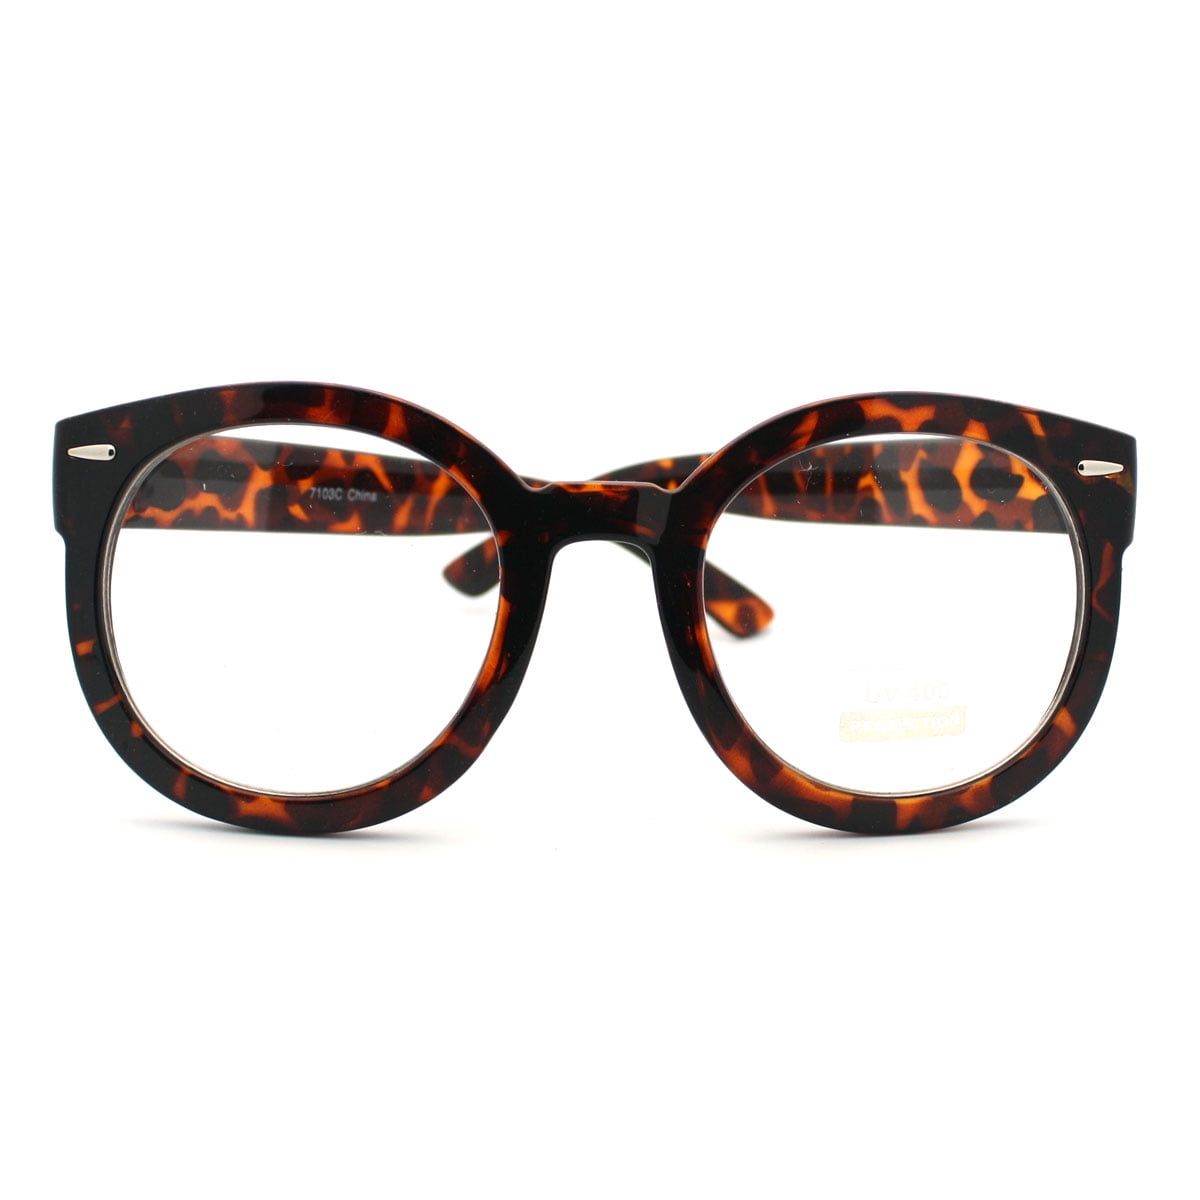 Progressive Eyeglasses Online with Largefit, Horn, Full-Rim Acetate/ Metal Design — Attitude in Clear/Black/Clear Melon by Eyebuydirect - Lenses